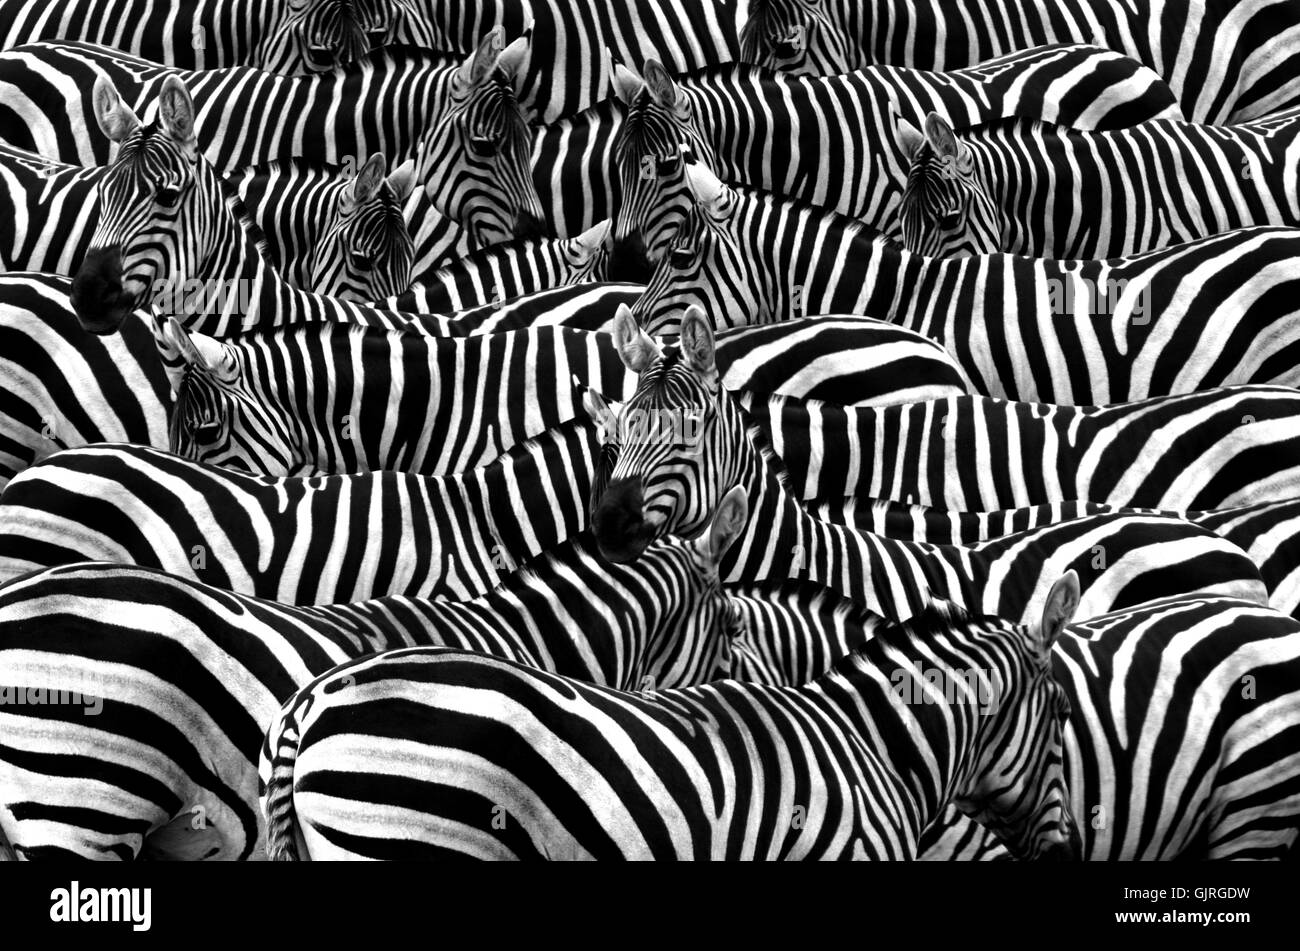 zebras Stock Photo